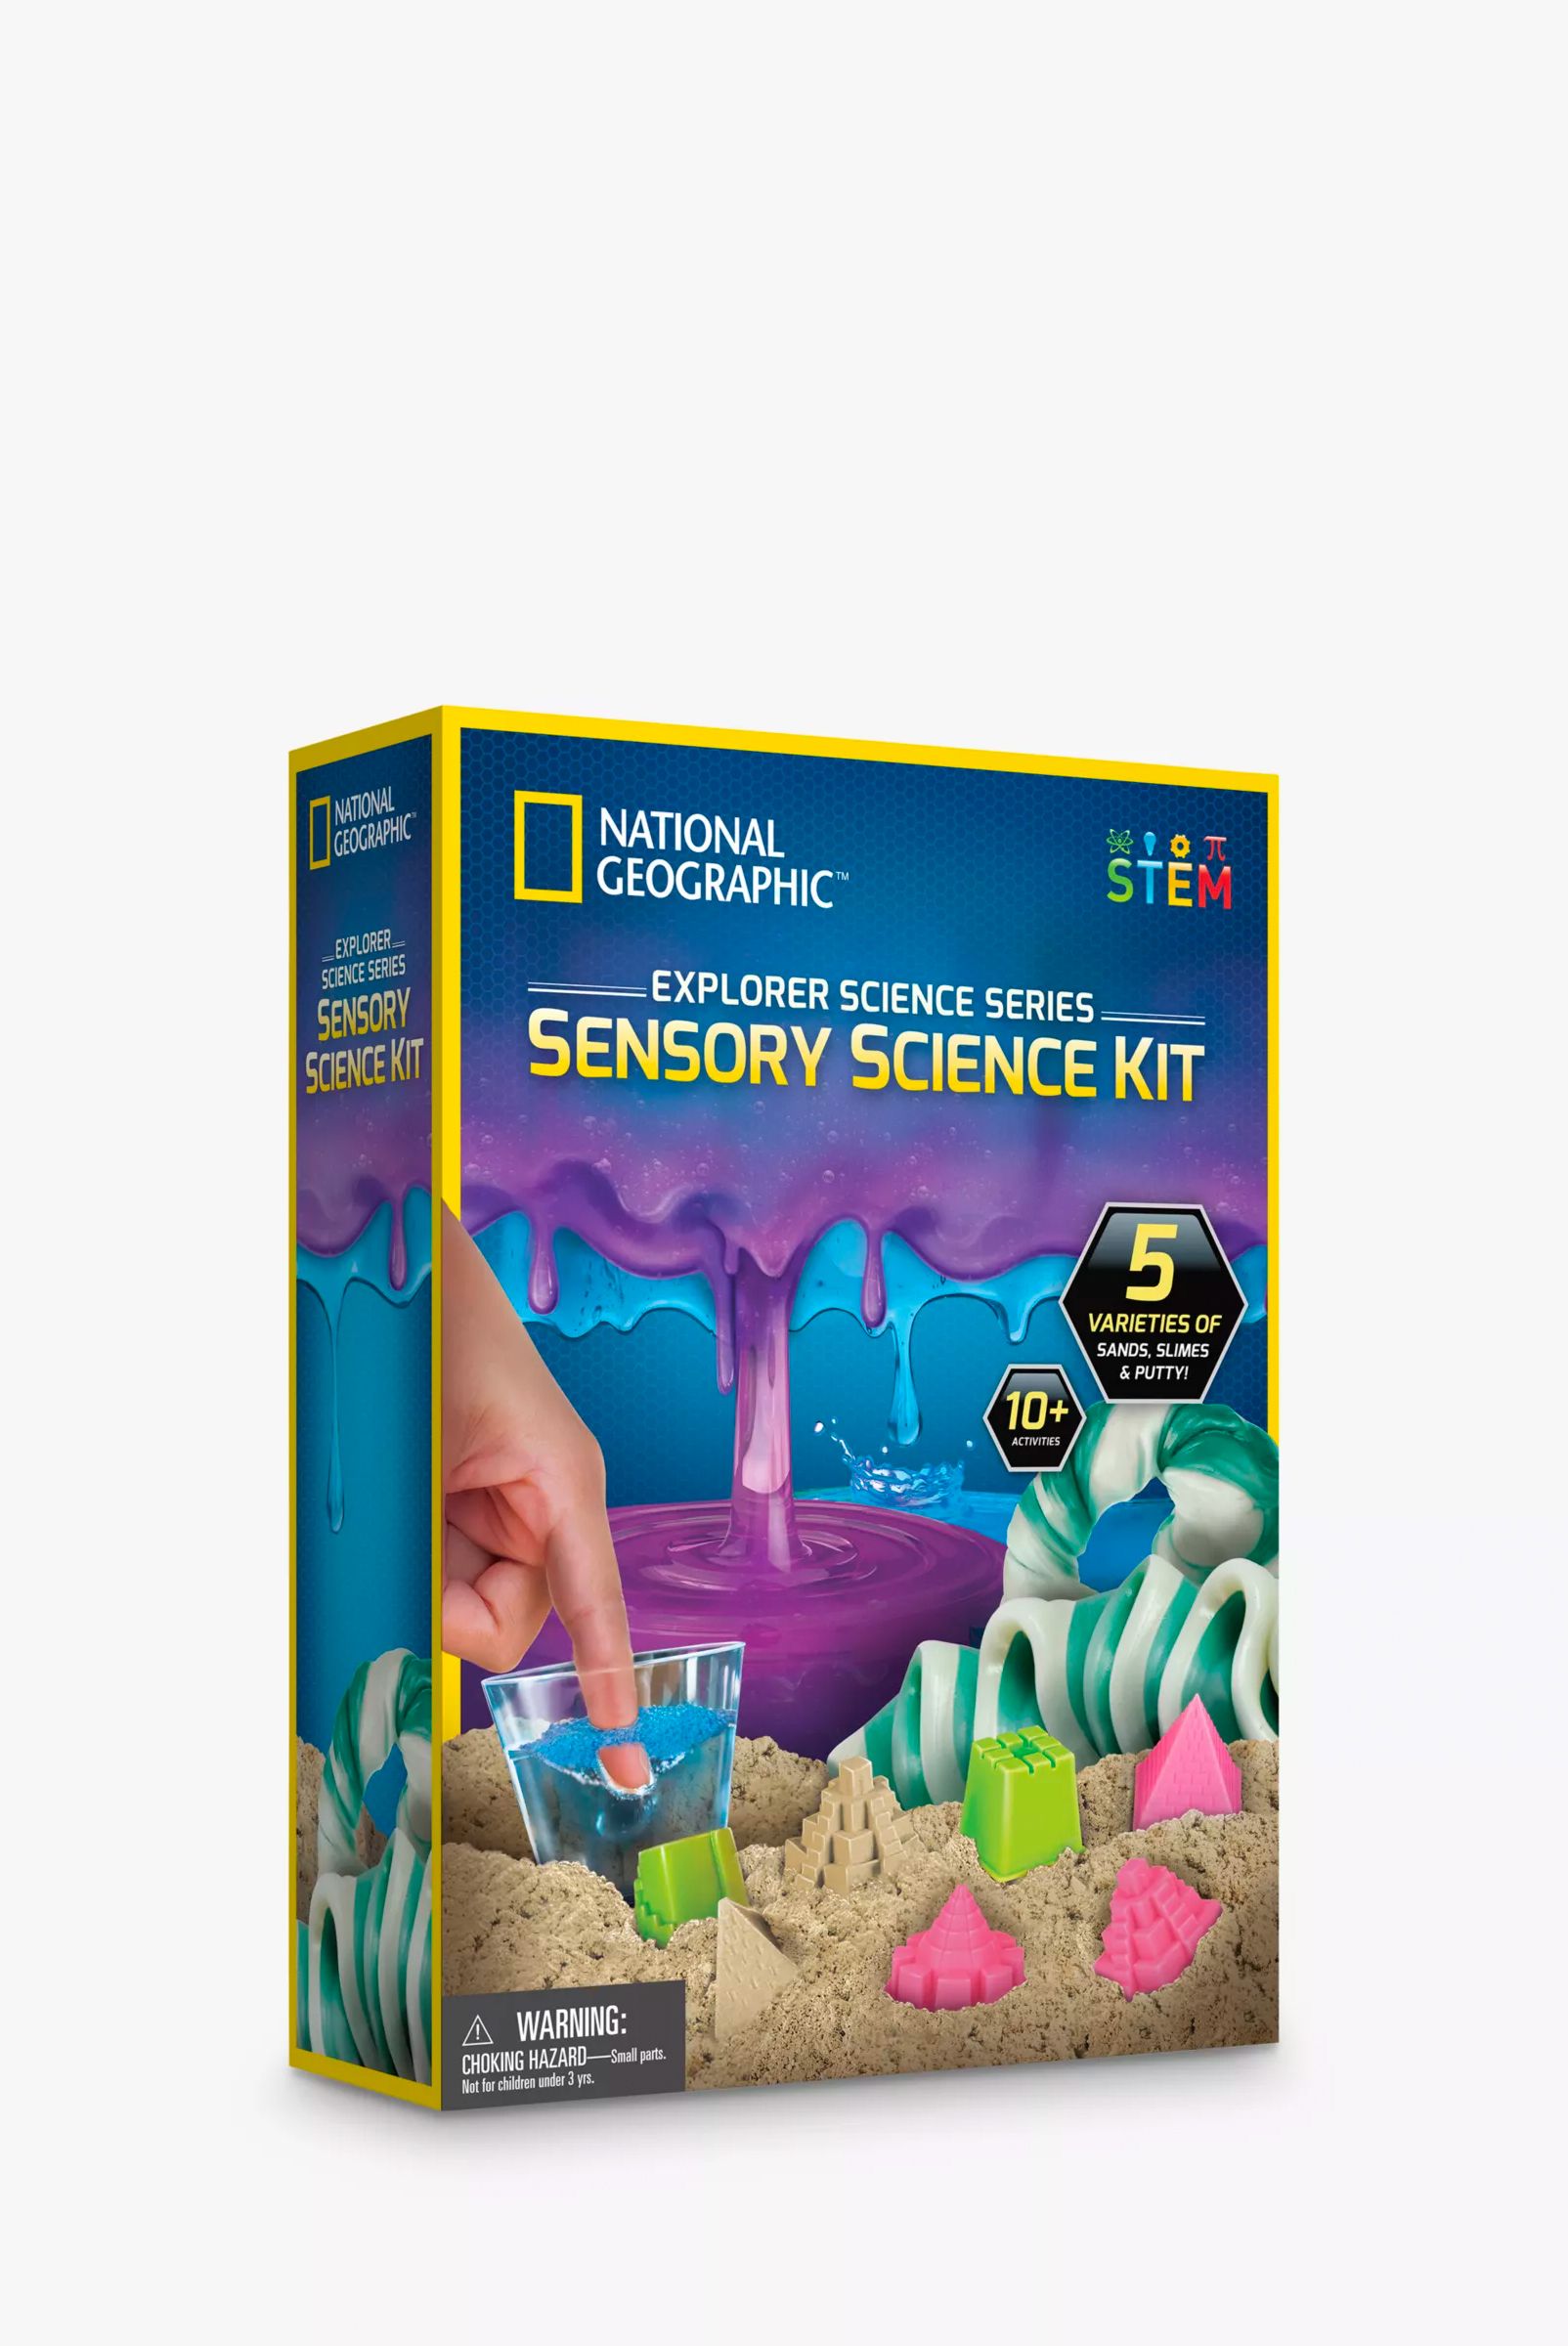 National Geographic Explorer Science Series Sensory Science Kit, £24.99